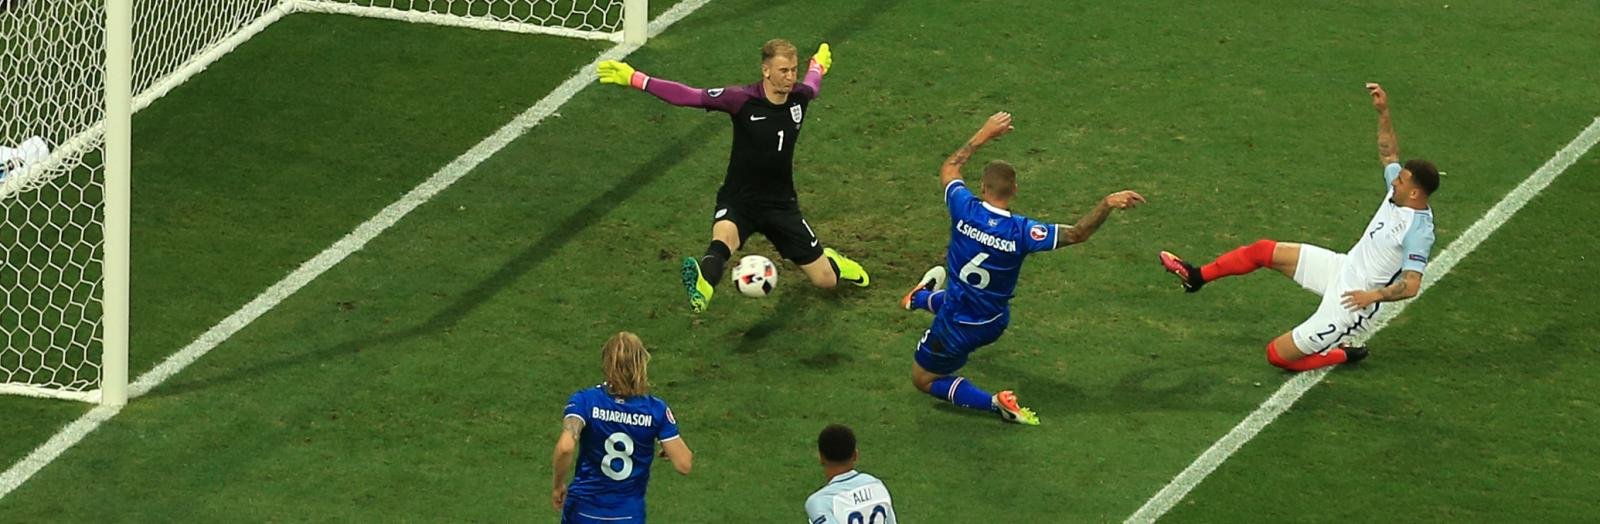 England 1-2 Iceland: EURO 2016 Round of 16 Report